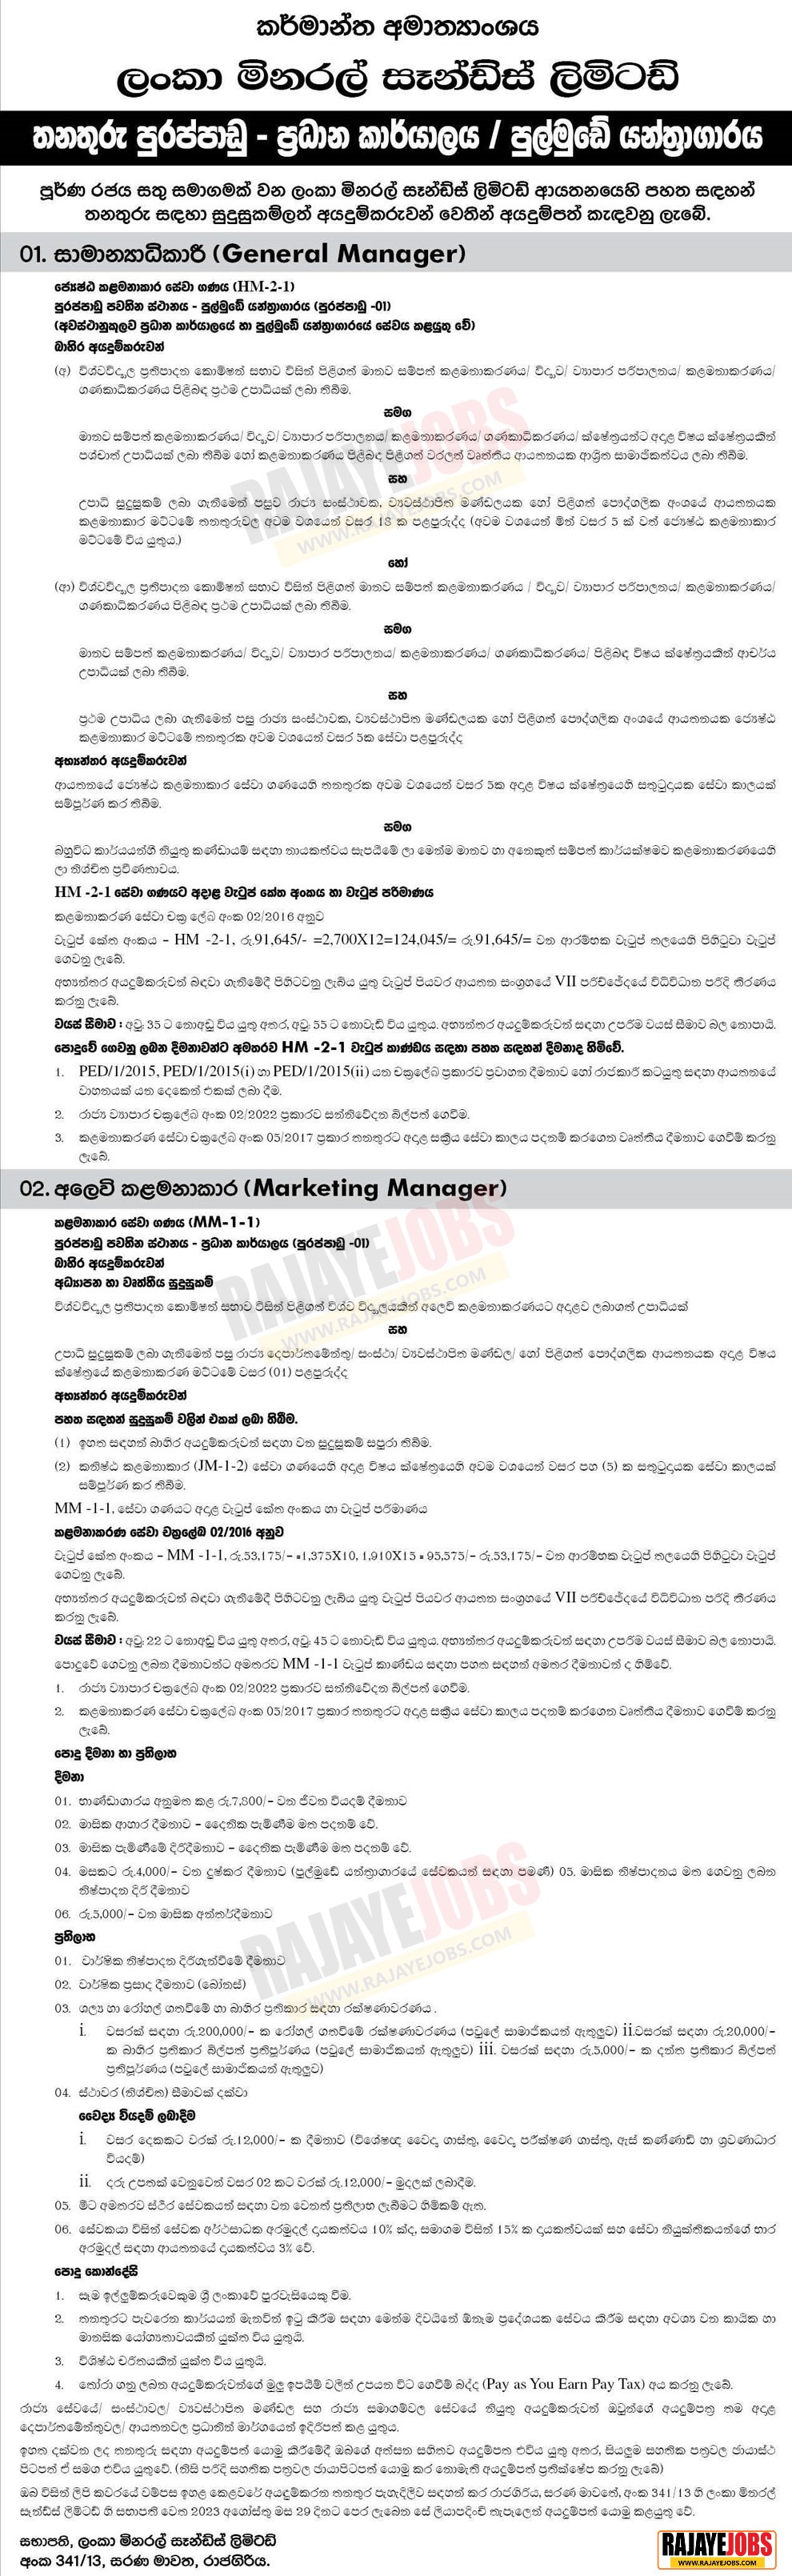 Lanka Mineral Sands Limited Job Vacancies 2023